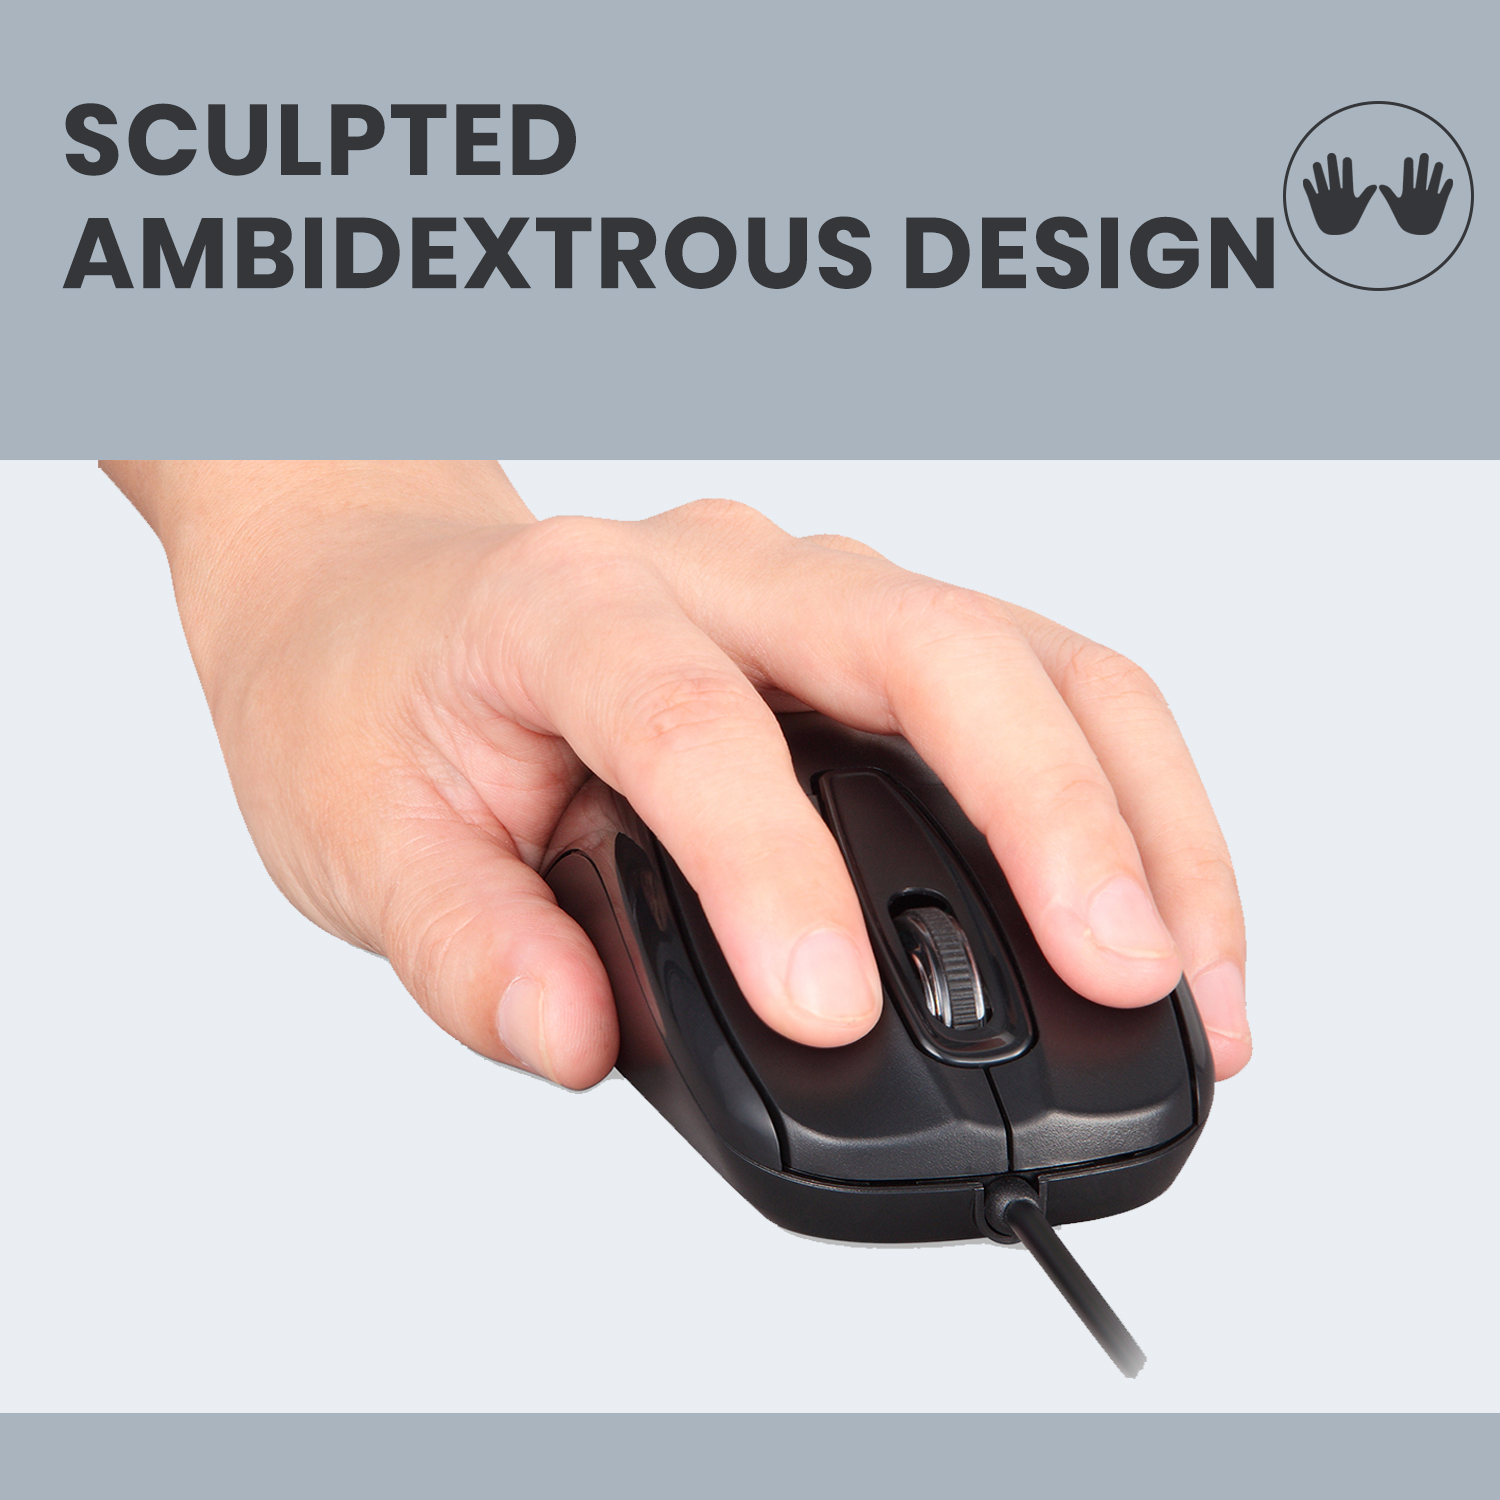 Ambidextrous Design